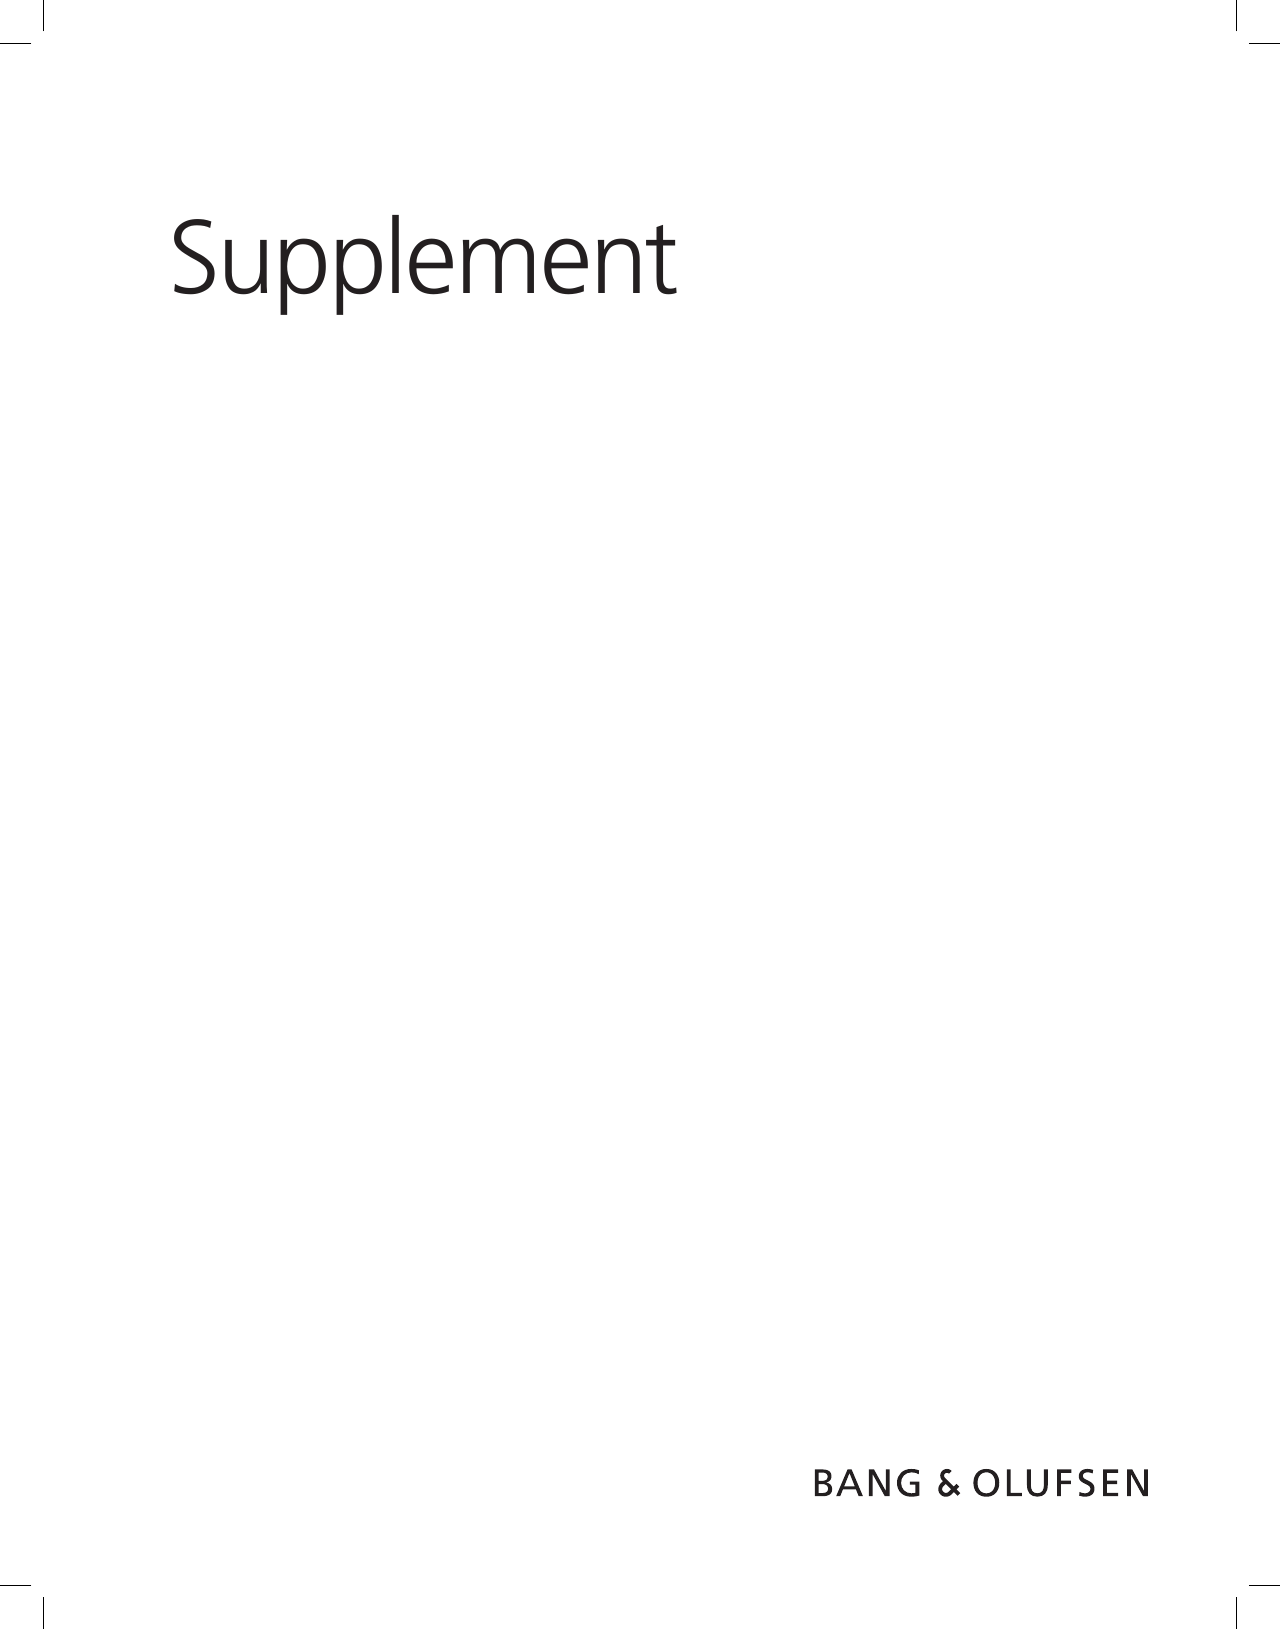 Supplement 